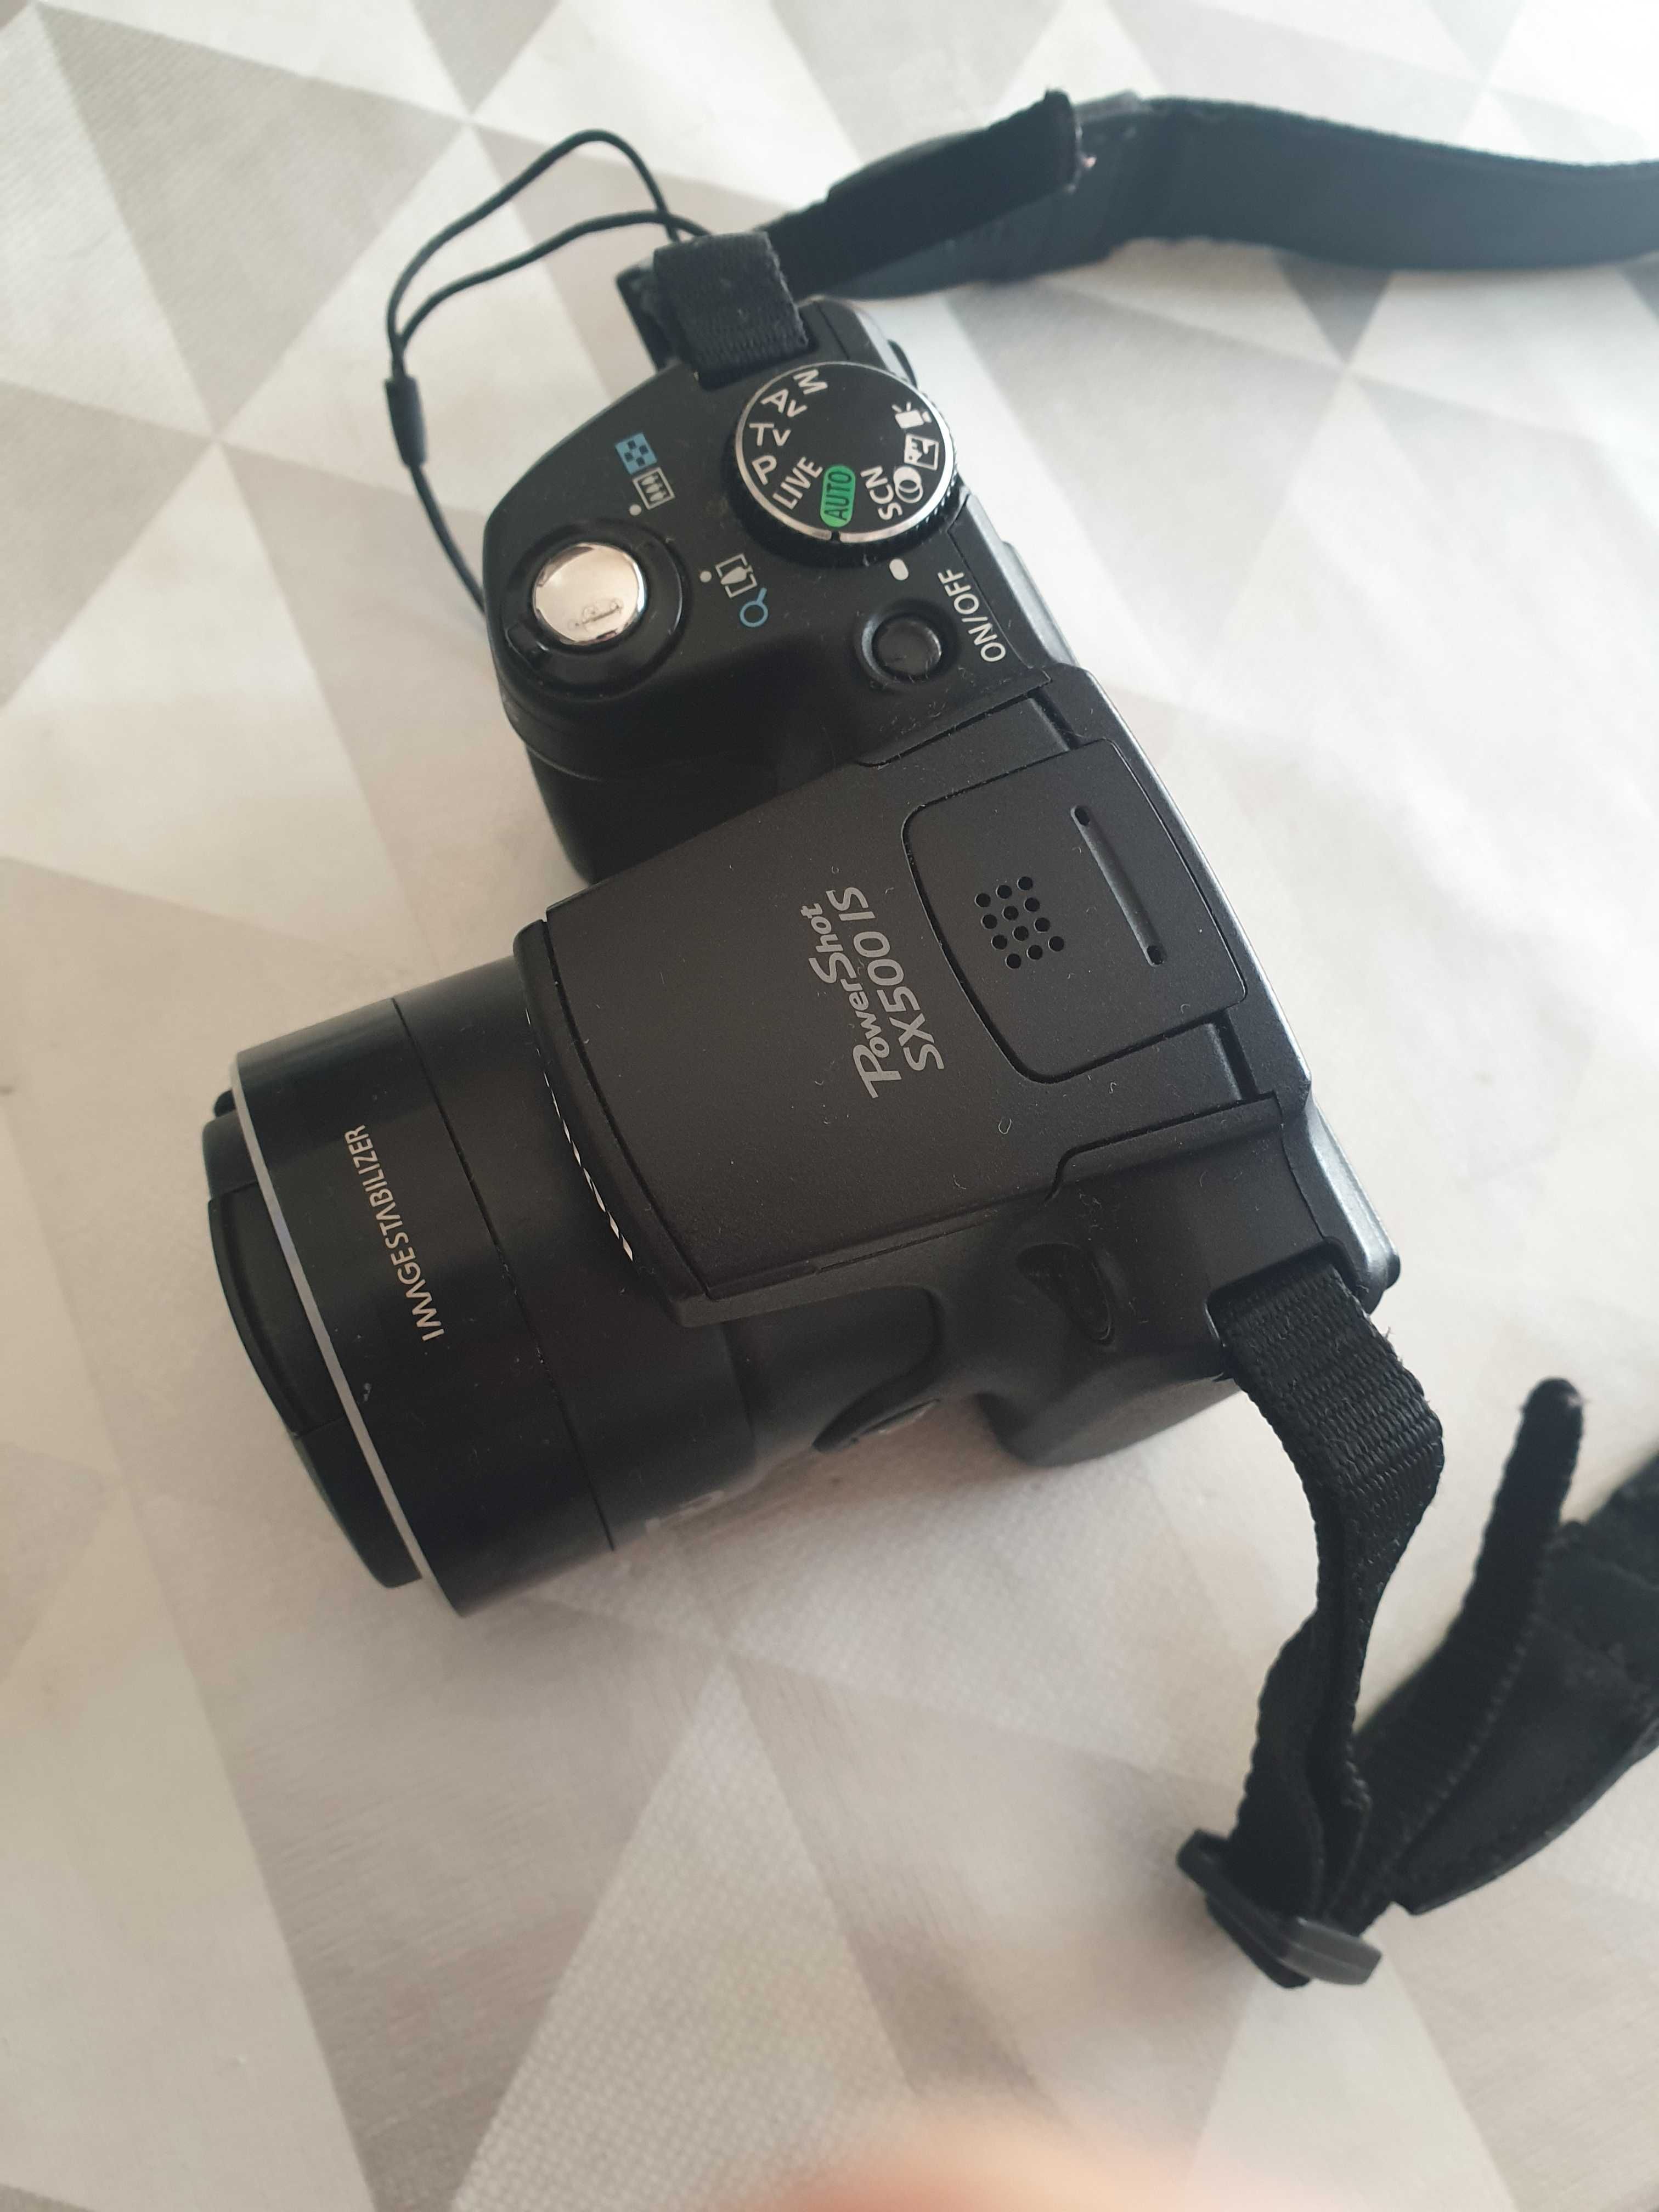 Cámara Canon PowerShot SX500 IS